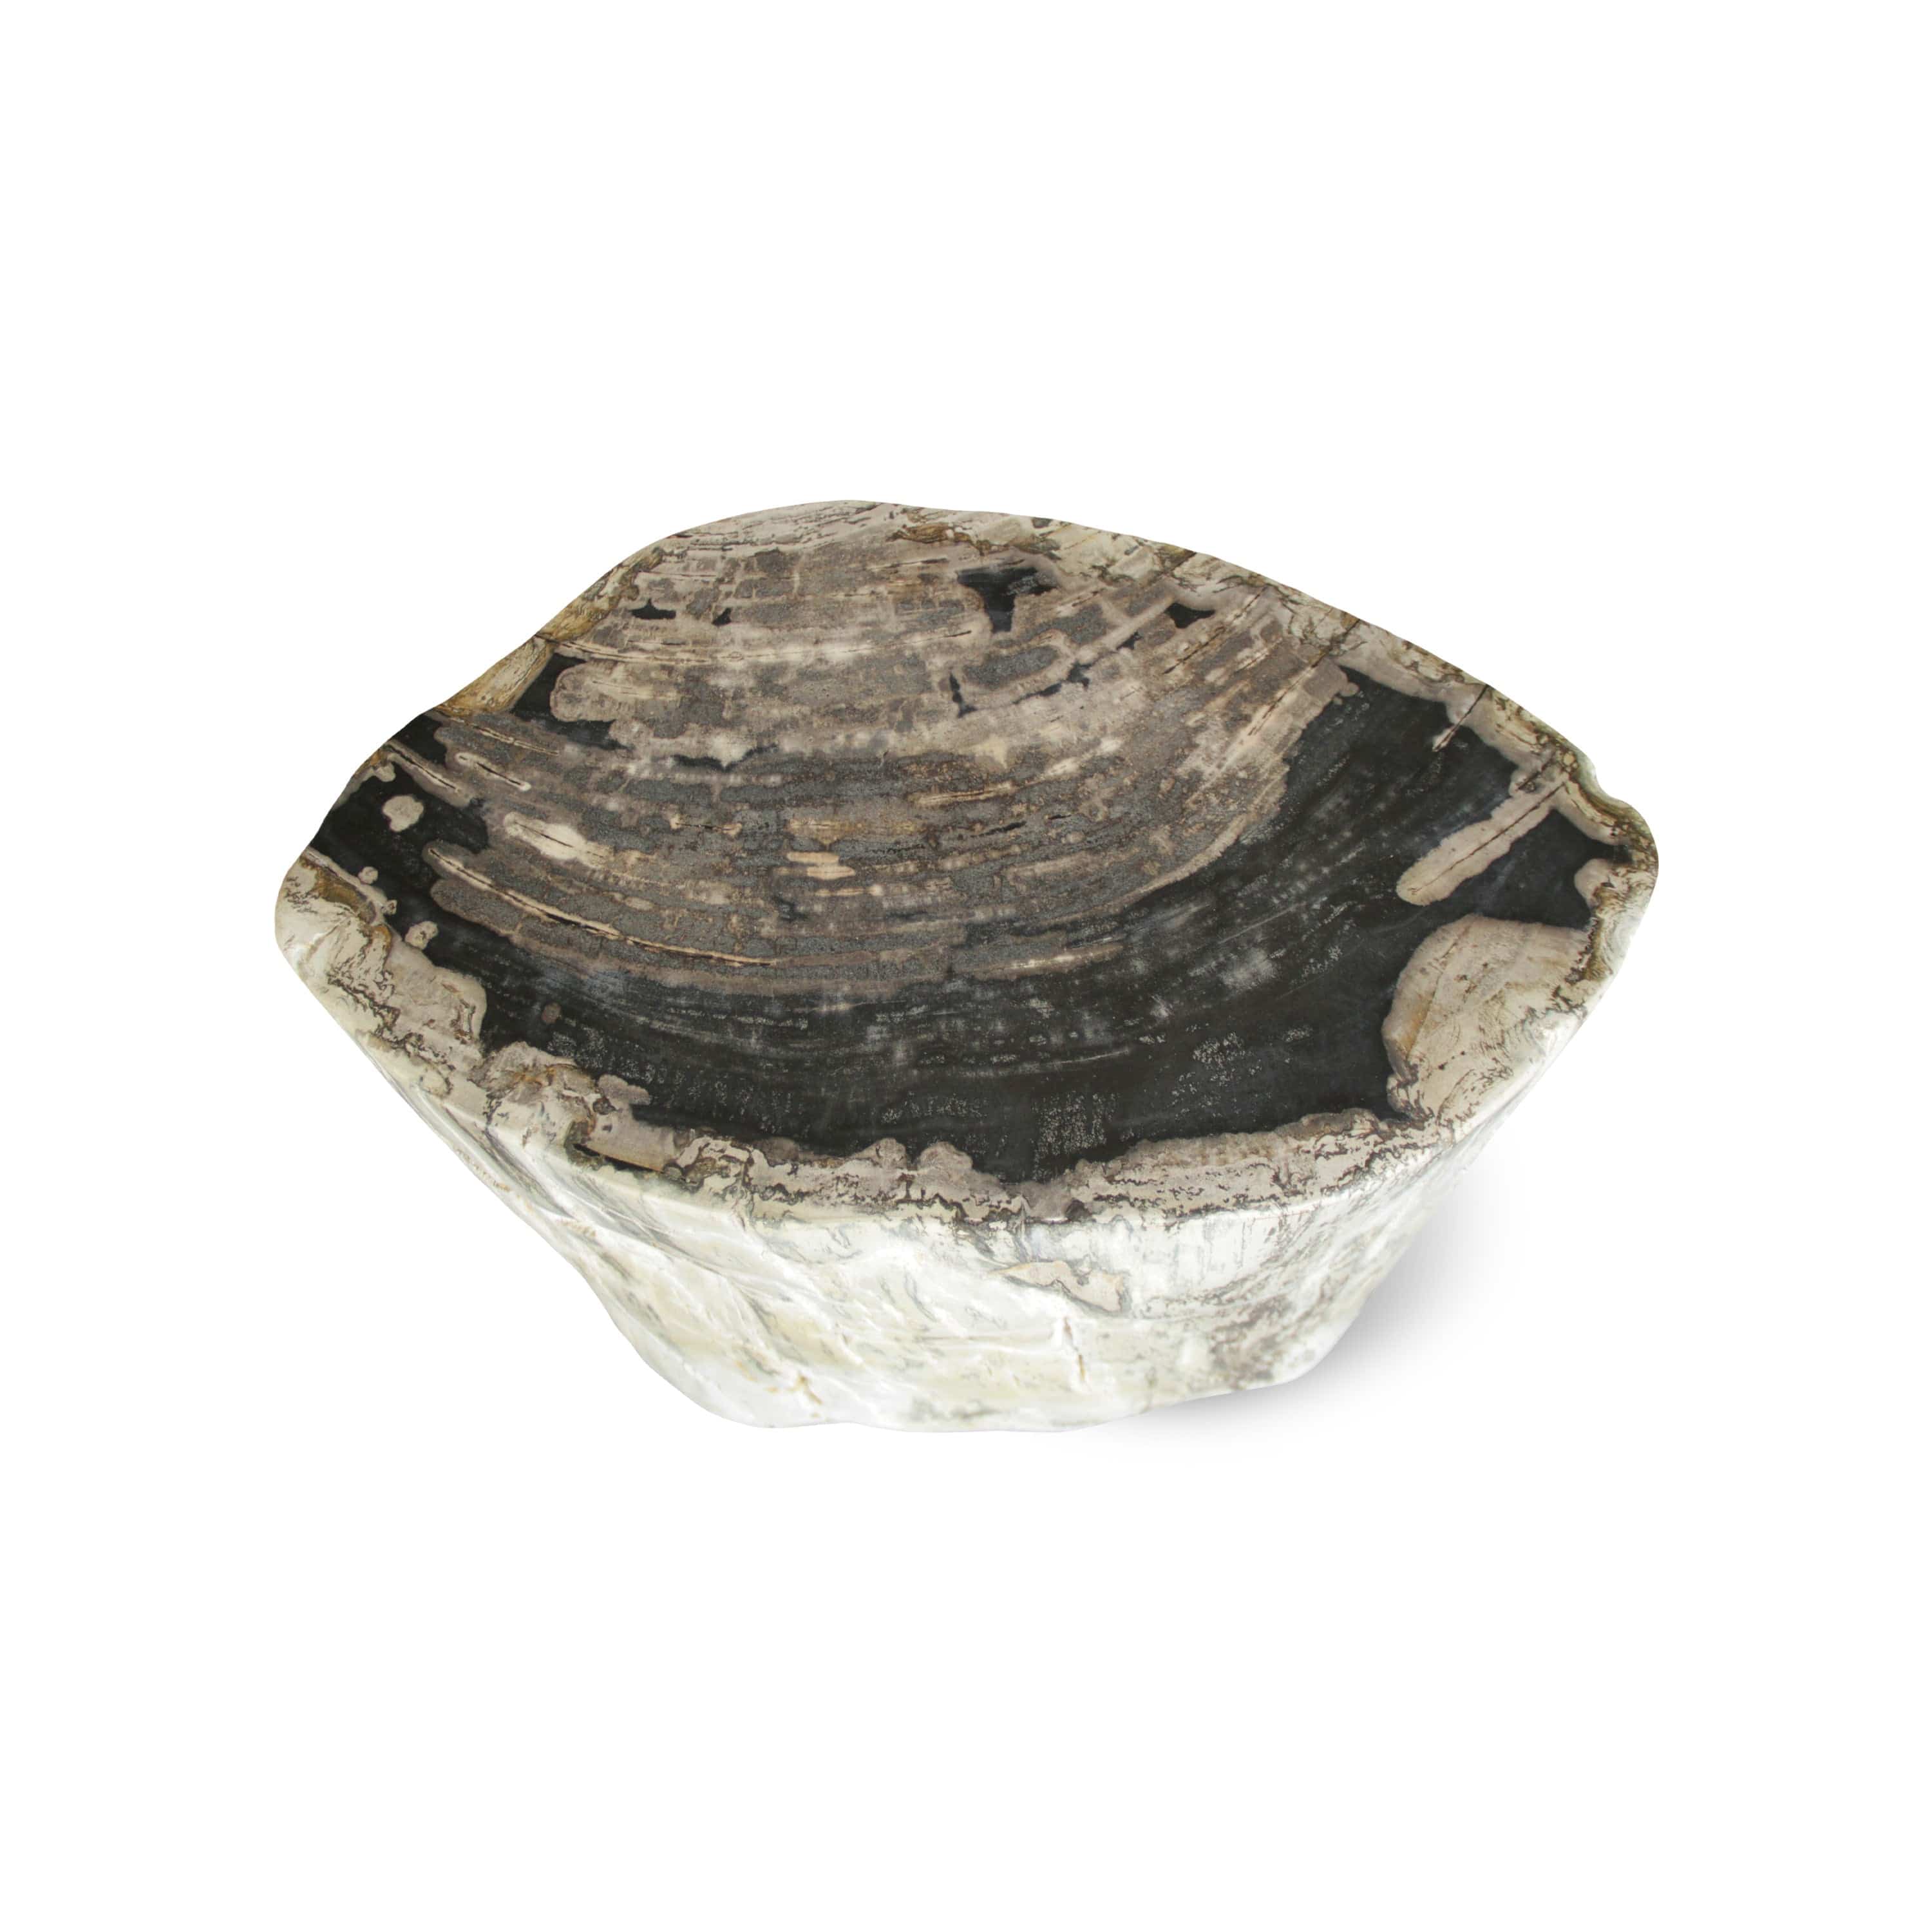 Kalifano Petrified Wood Petrified Wood Round Stump / Stool from Indonesia - 46" / 200 lbs PWS3800.011